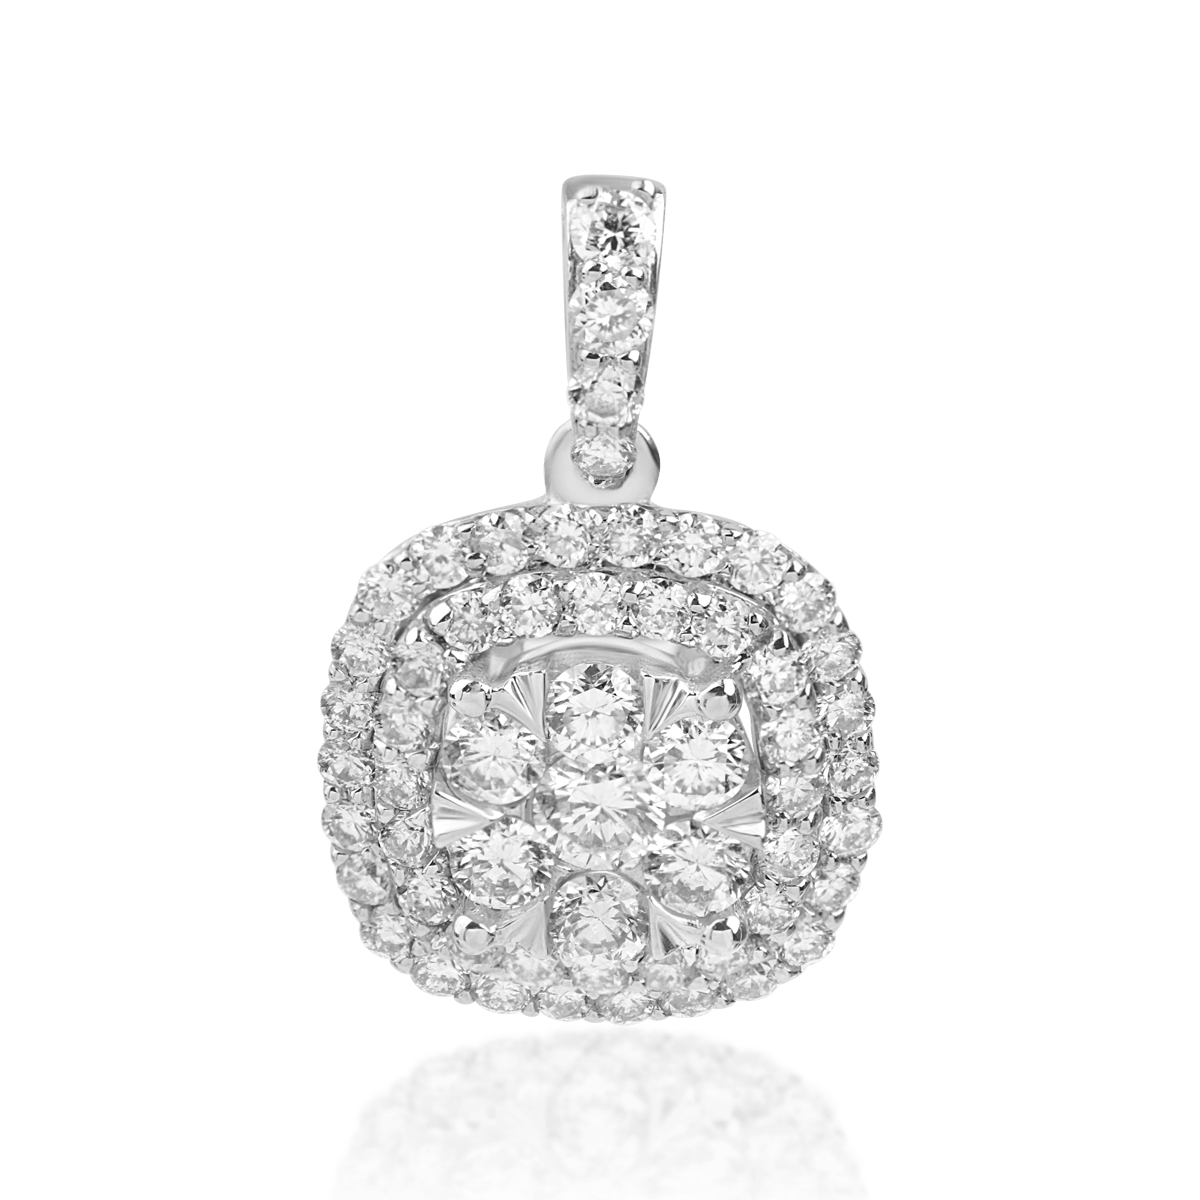 18K white gold pendant with 0.75ct diamonds